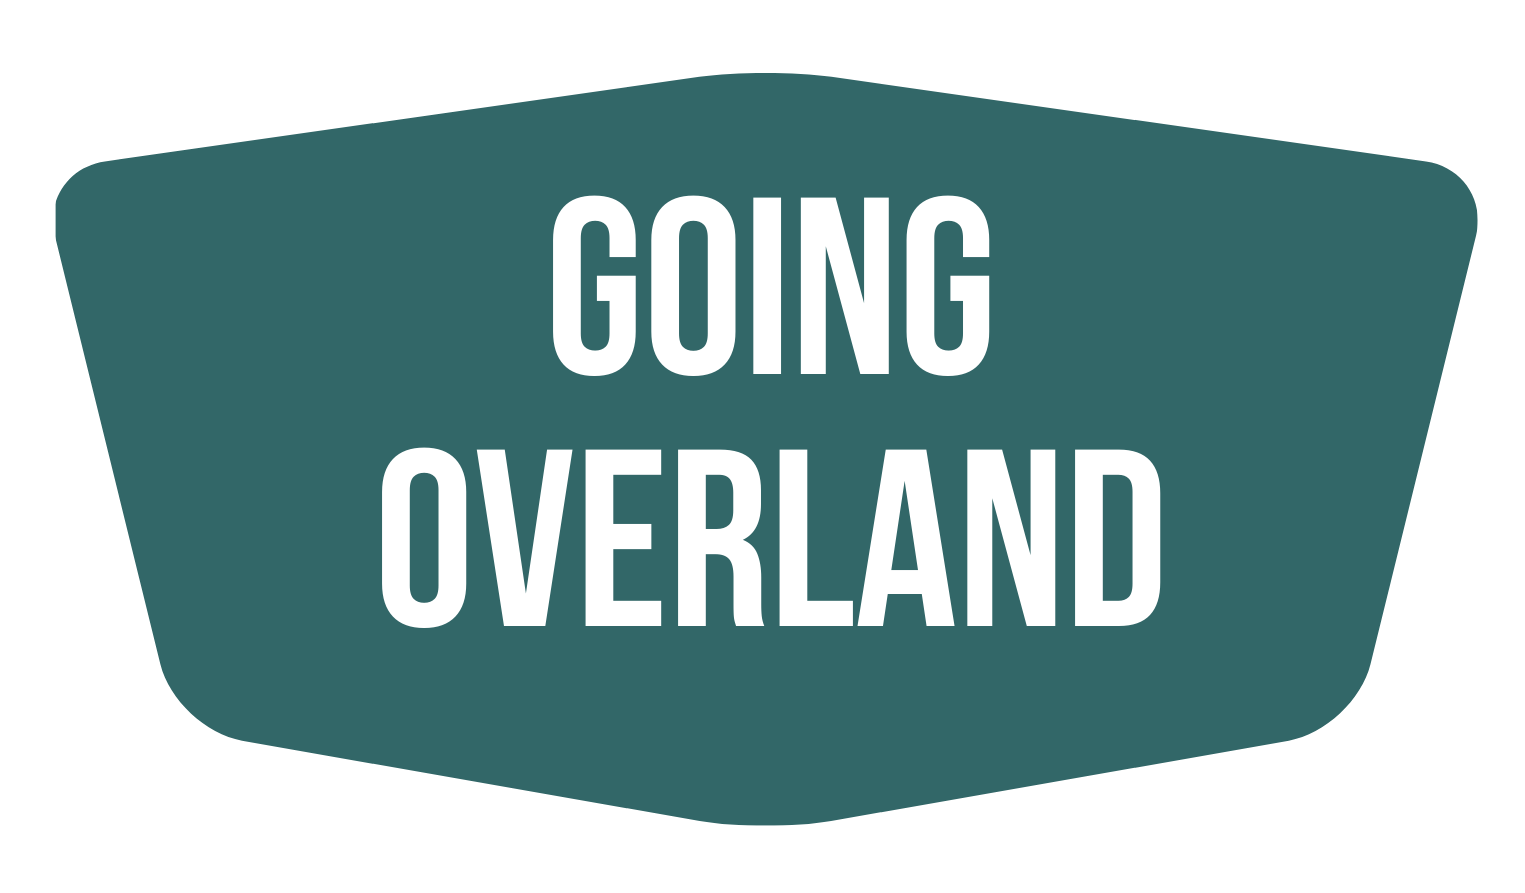 Going Overland